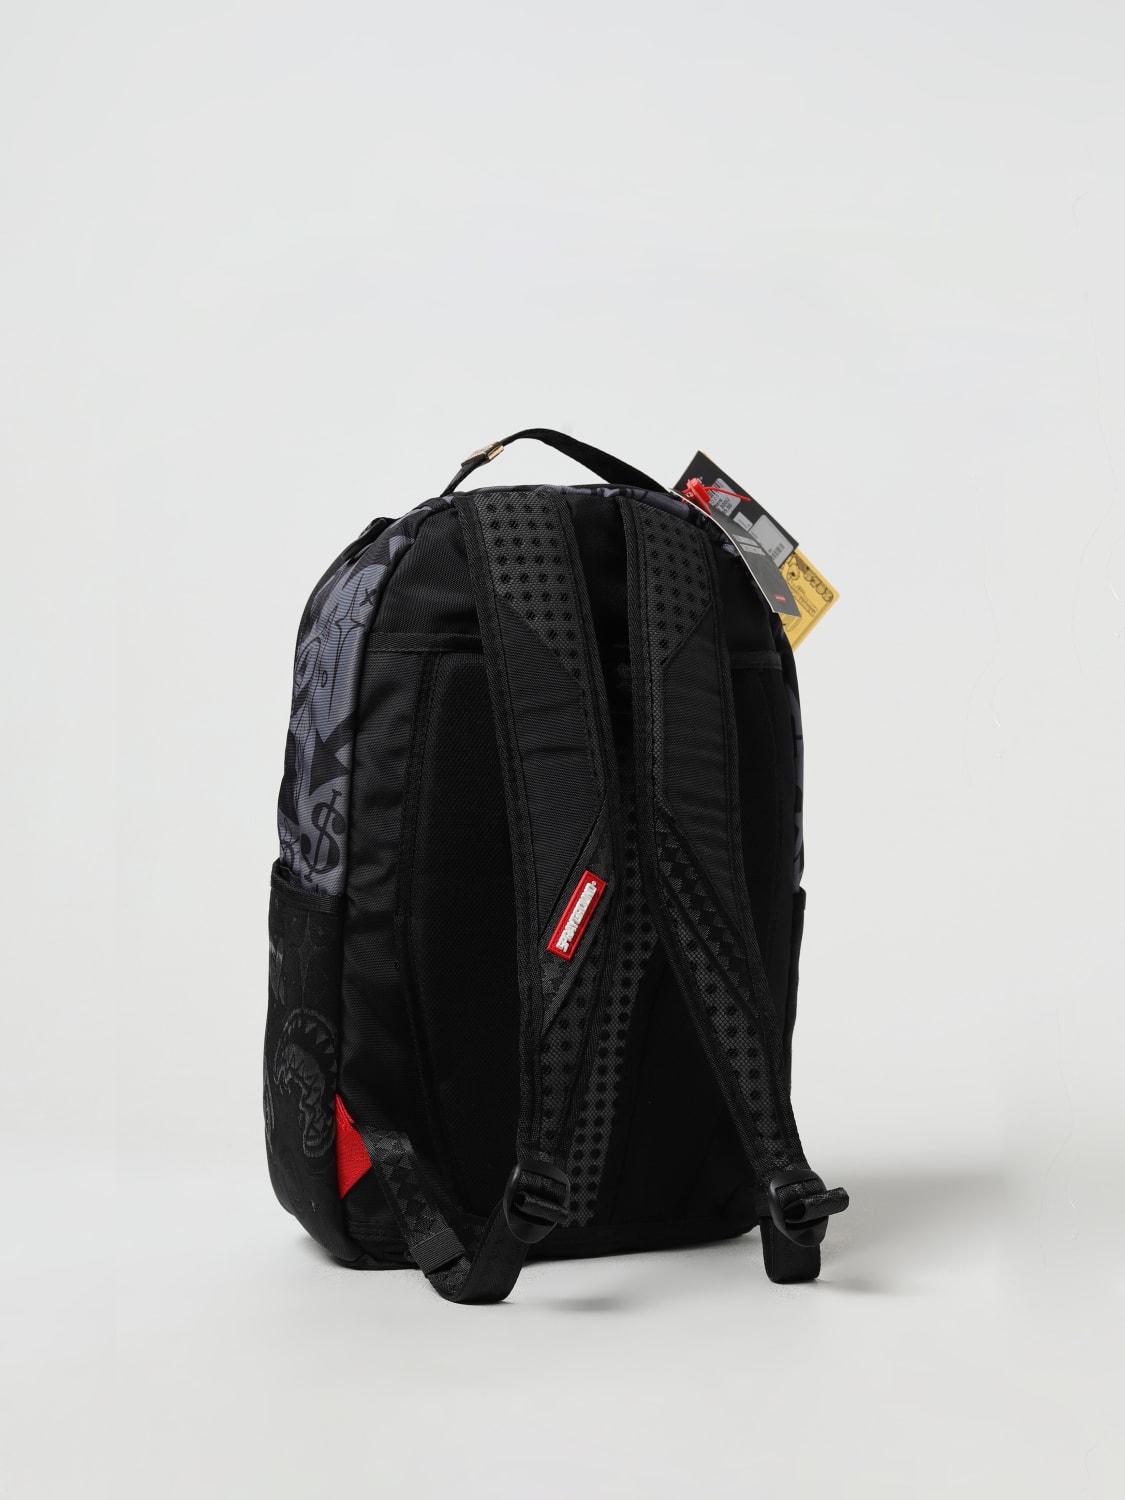 black sprayground backpack